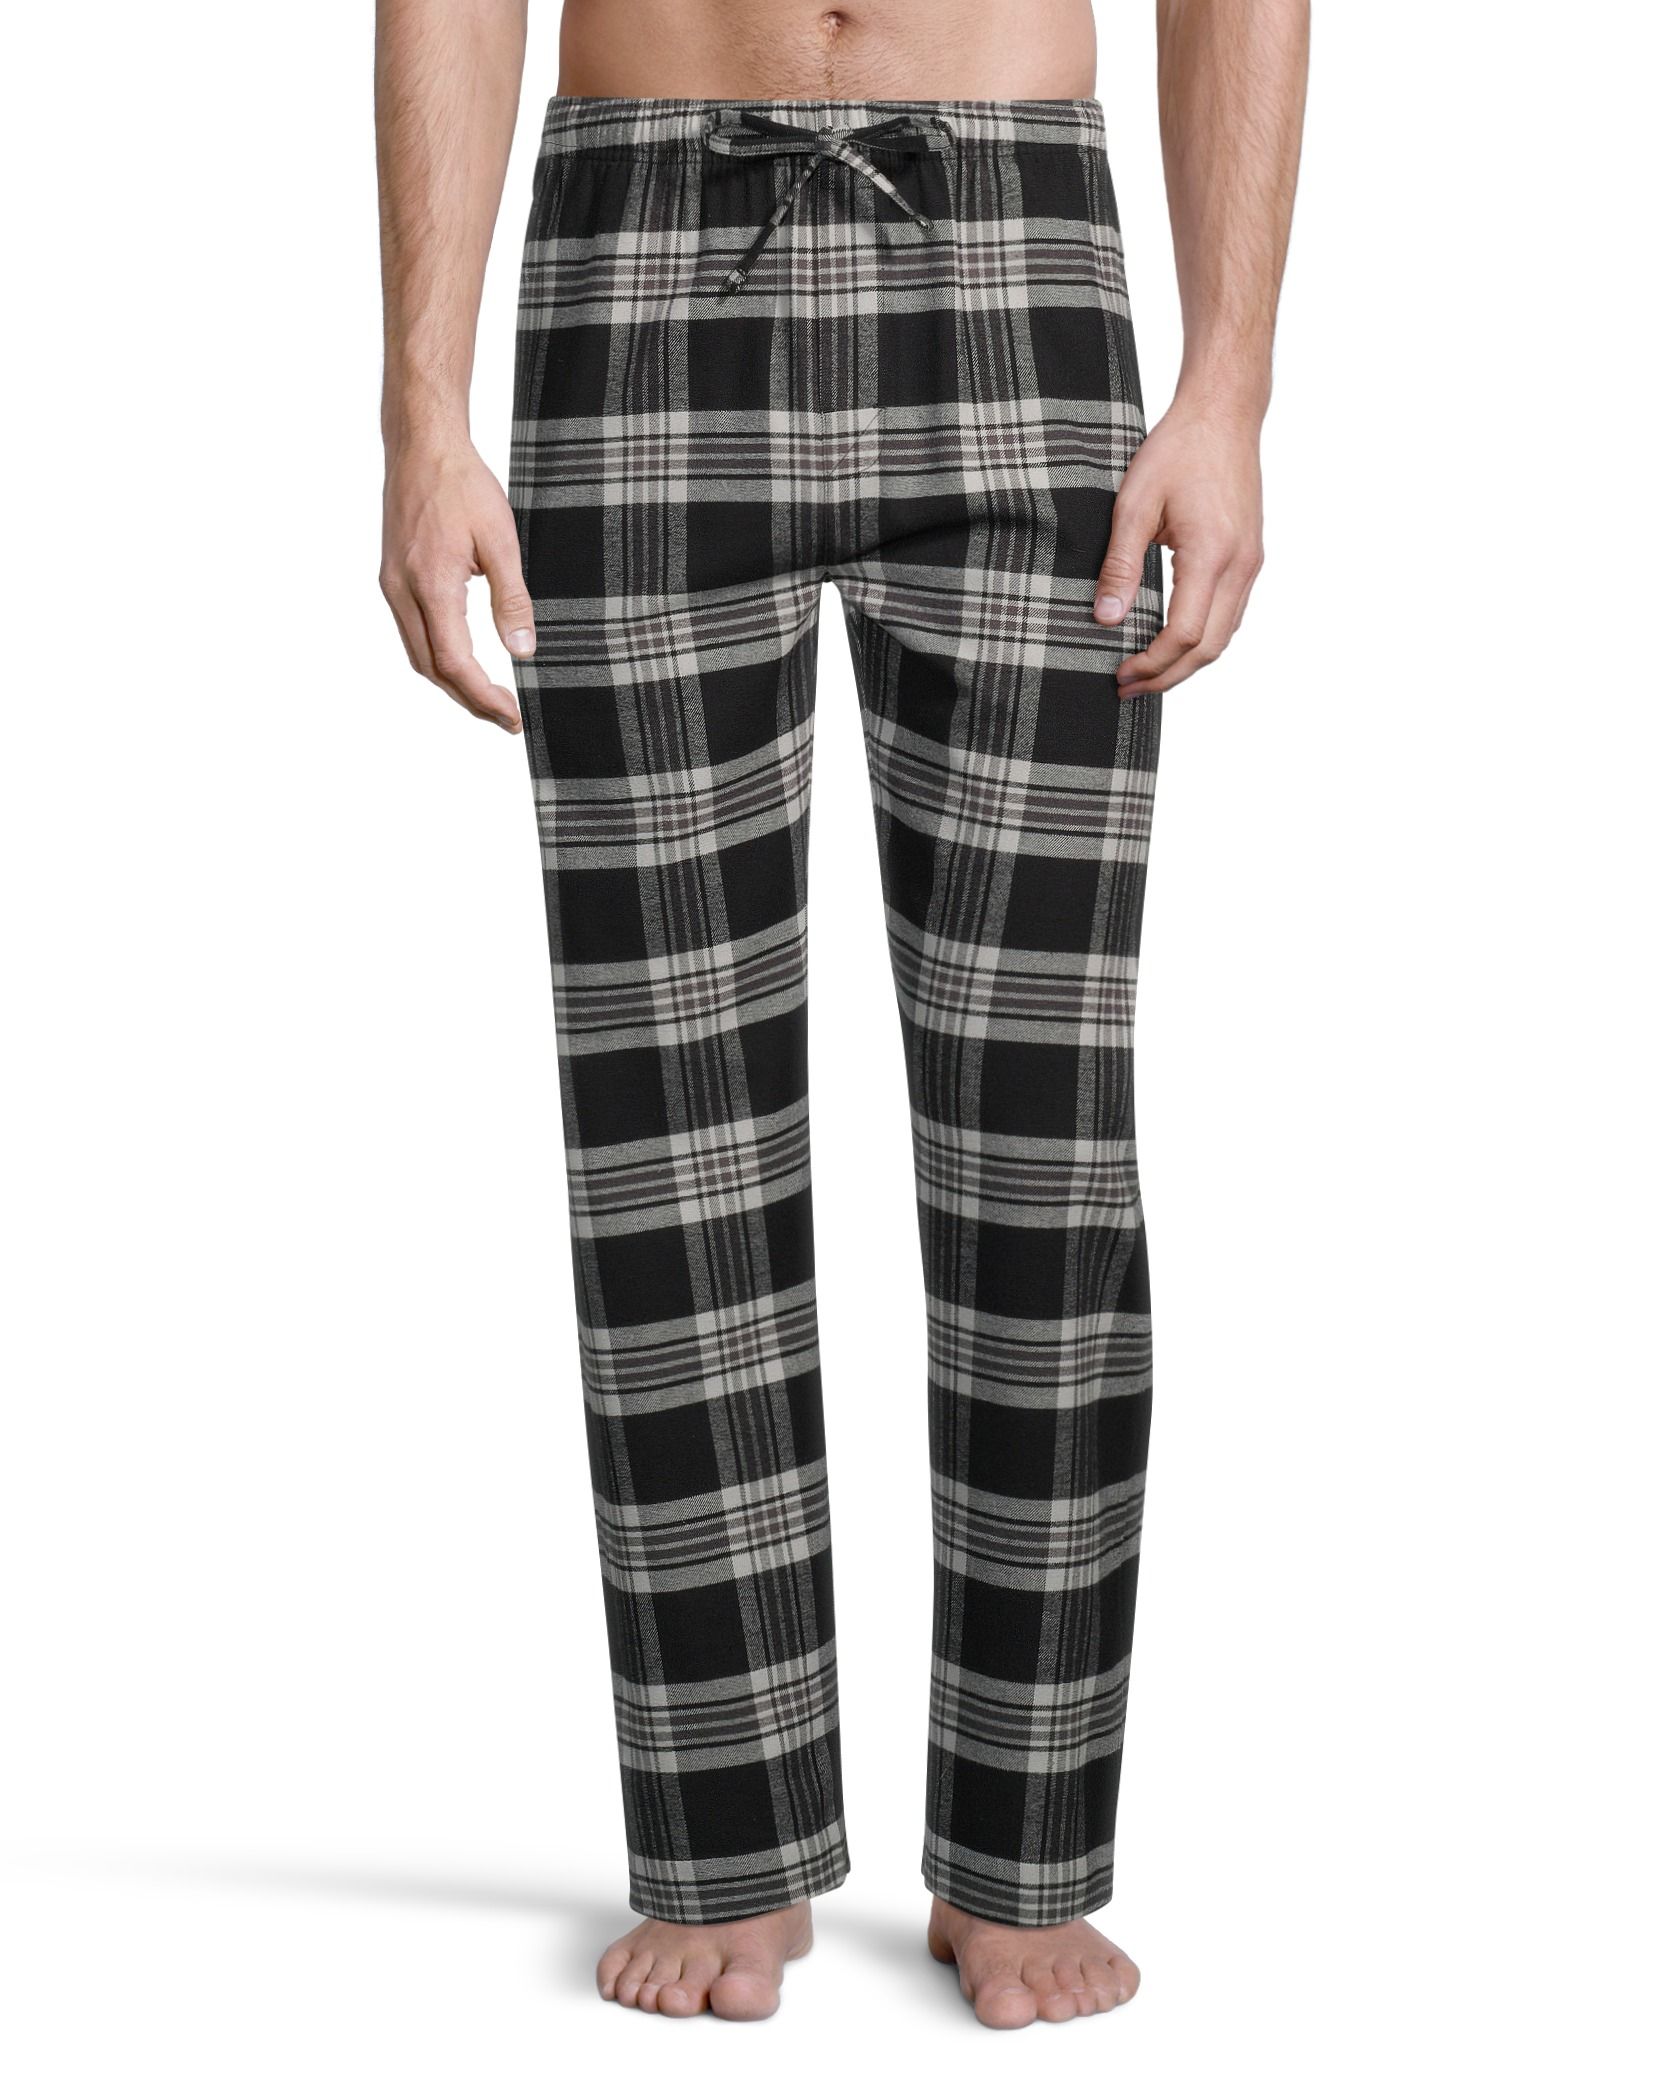 Flannel Pajama Pants Women -  Canada